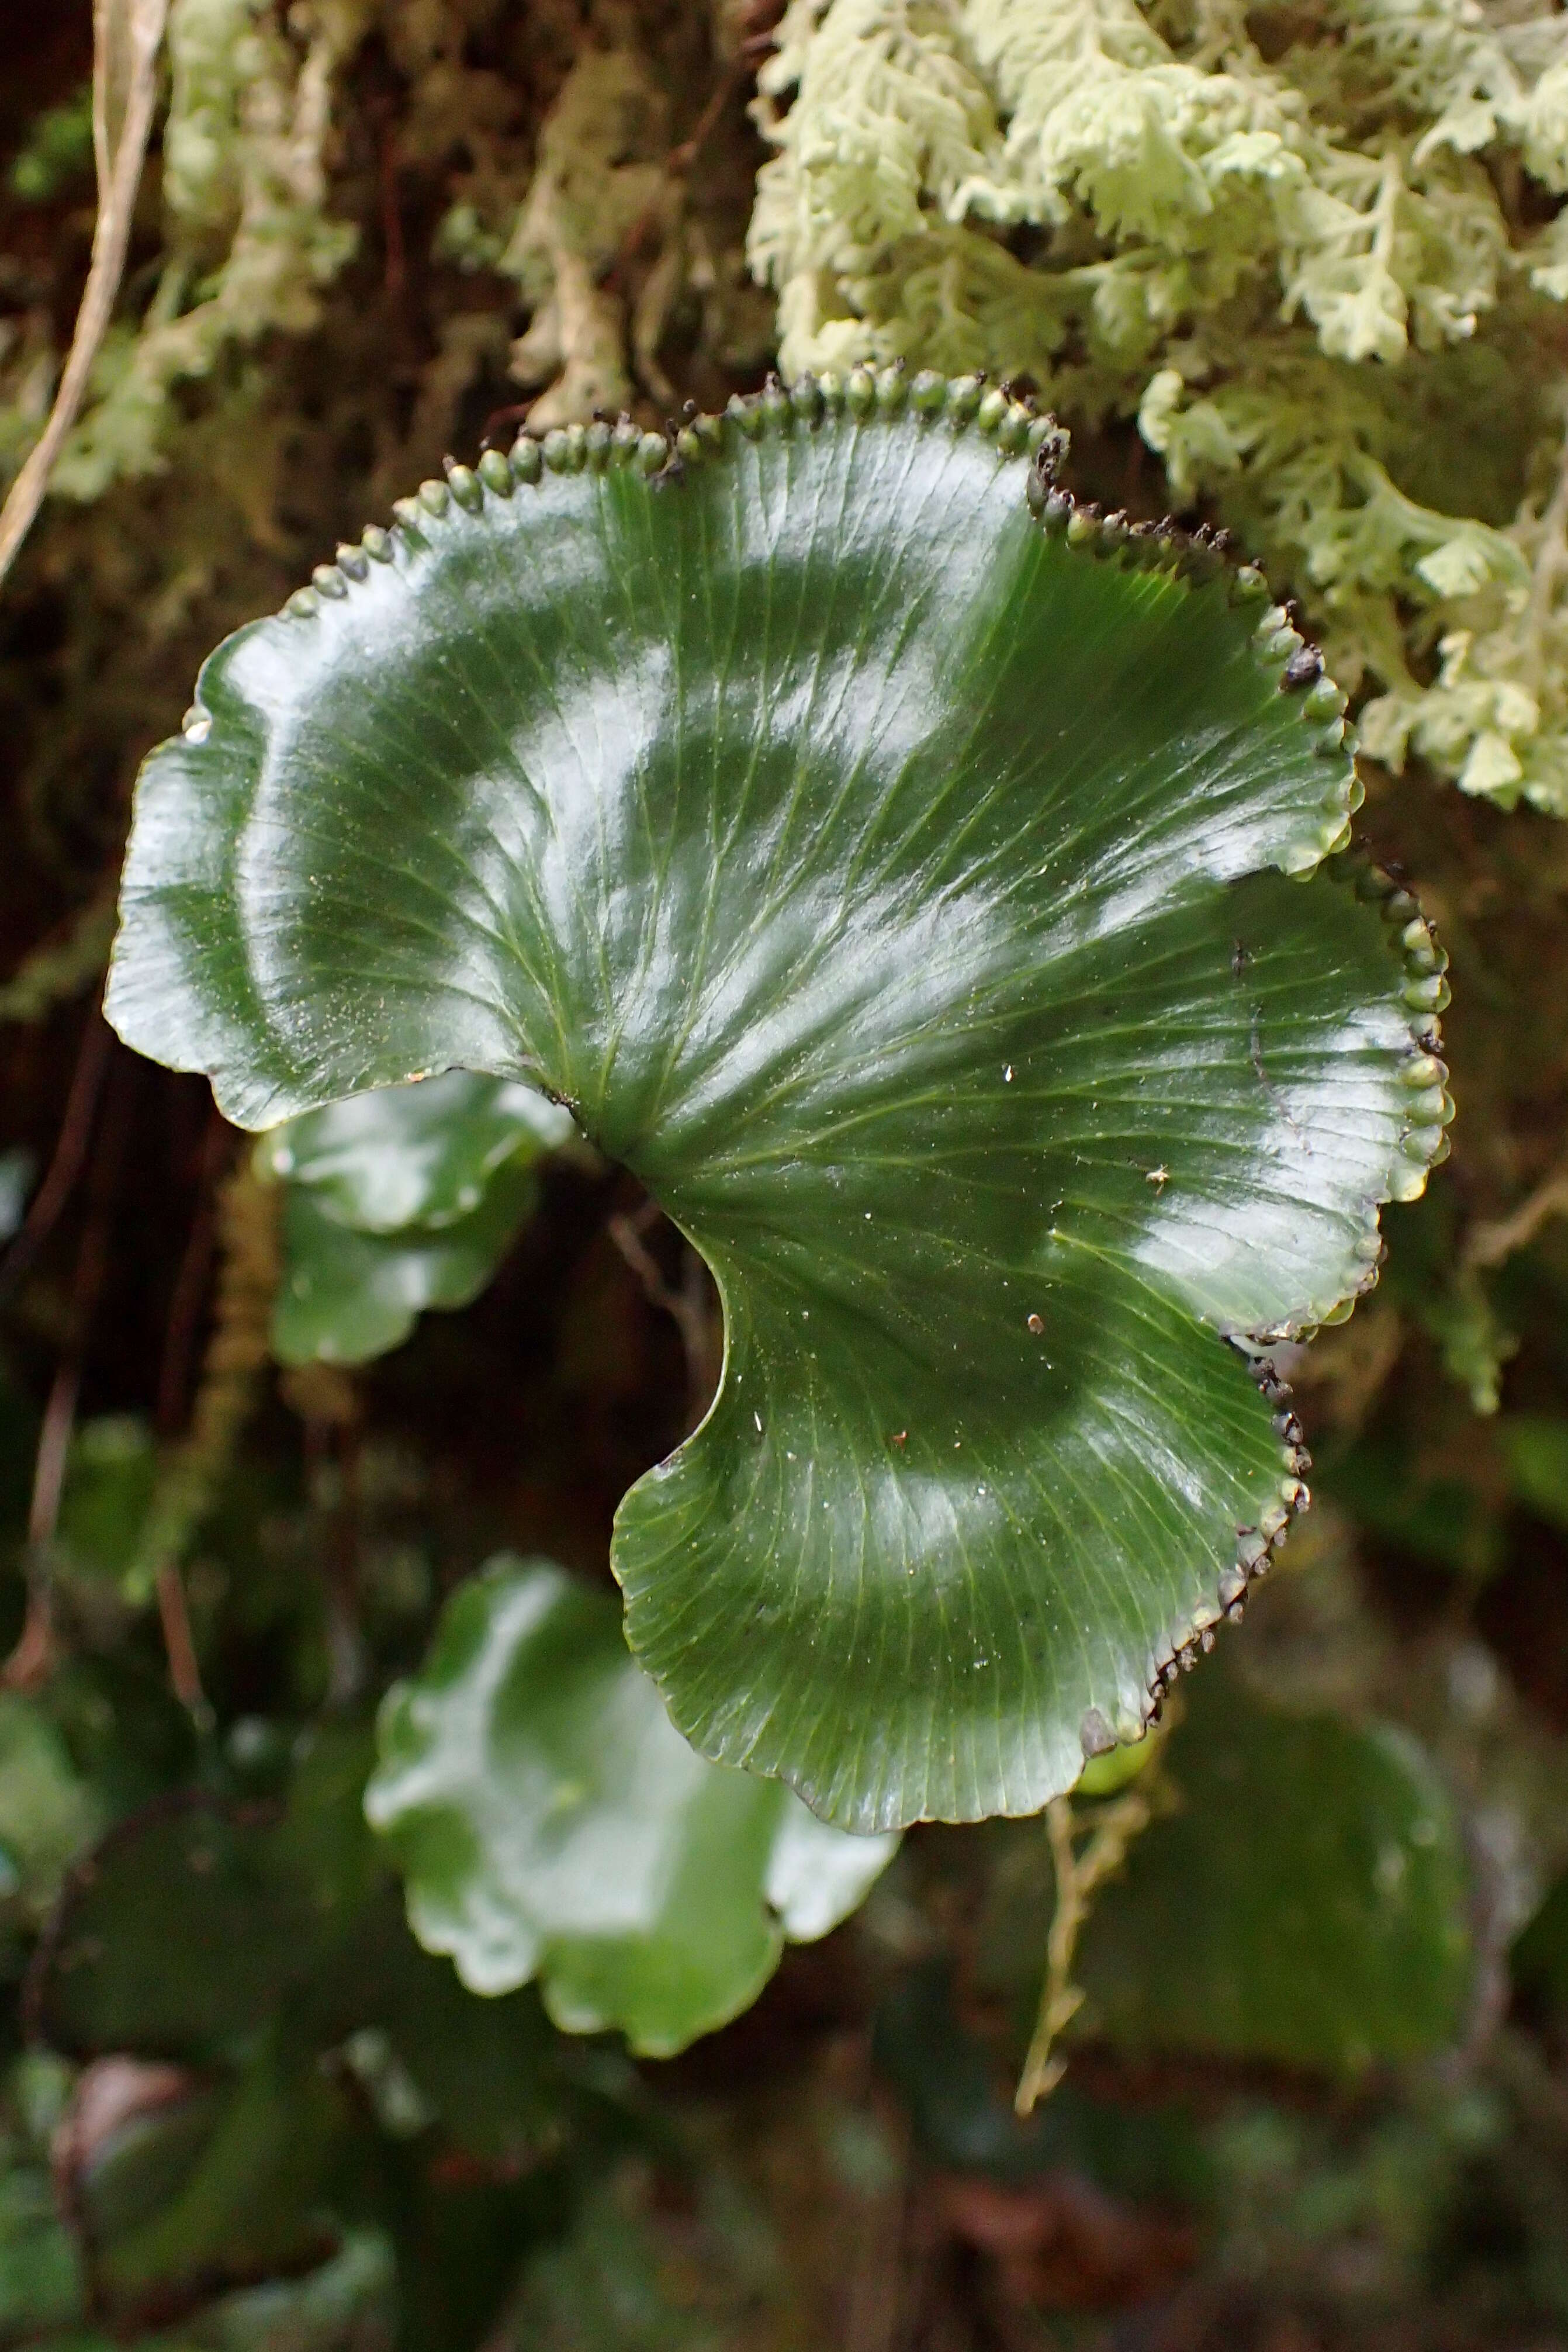 Image of kidney fern